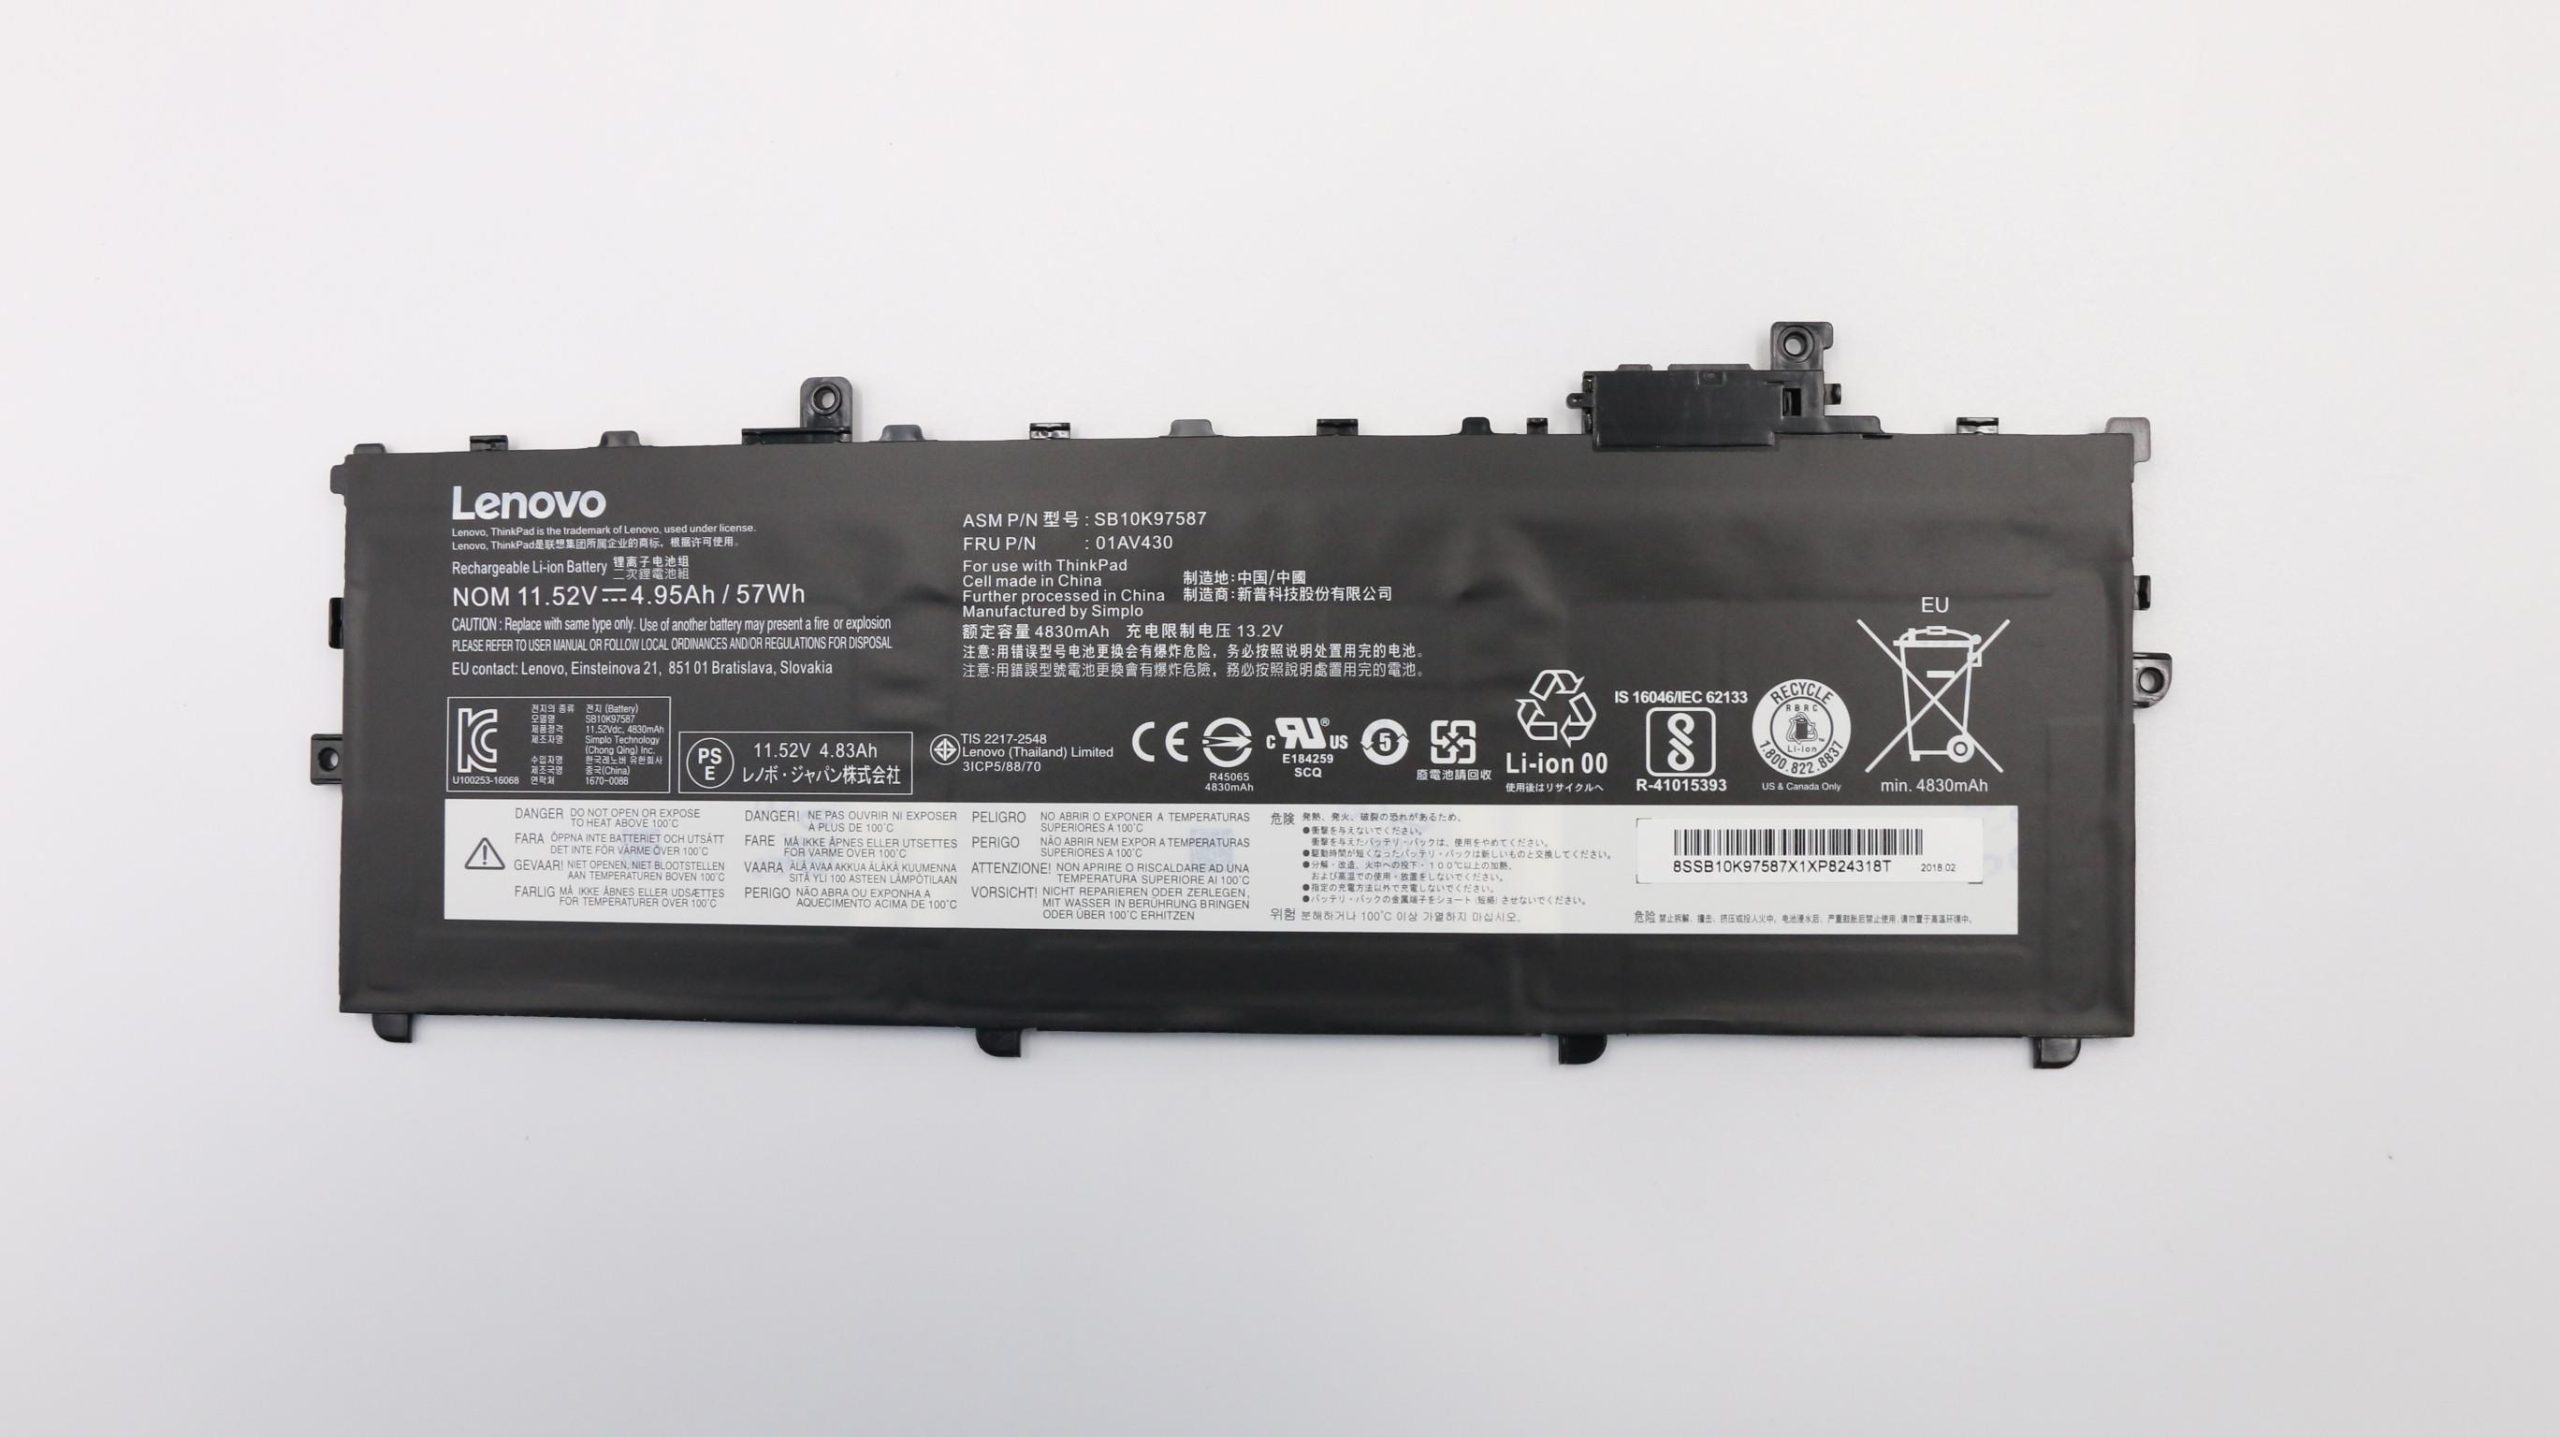 Lenovo батарея купить. Аккумулятор Lenovo THINKPAD x1 Carbon 1gen. BVSM-430 аккумулятор. 741563451 V0058. Rec 22.57WH 7.4V 506780 12yd2003 акамулятор где можно купить.